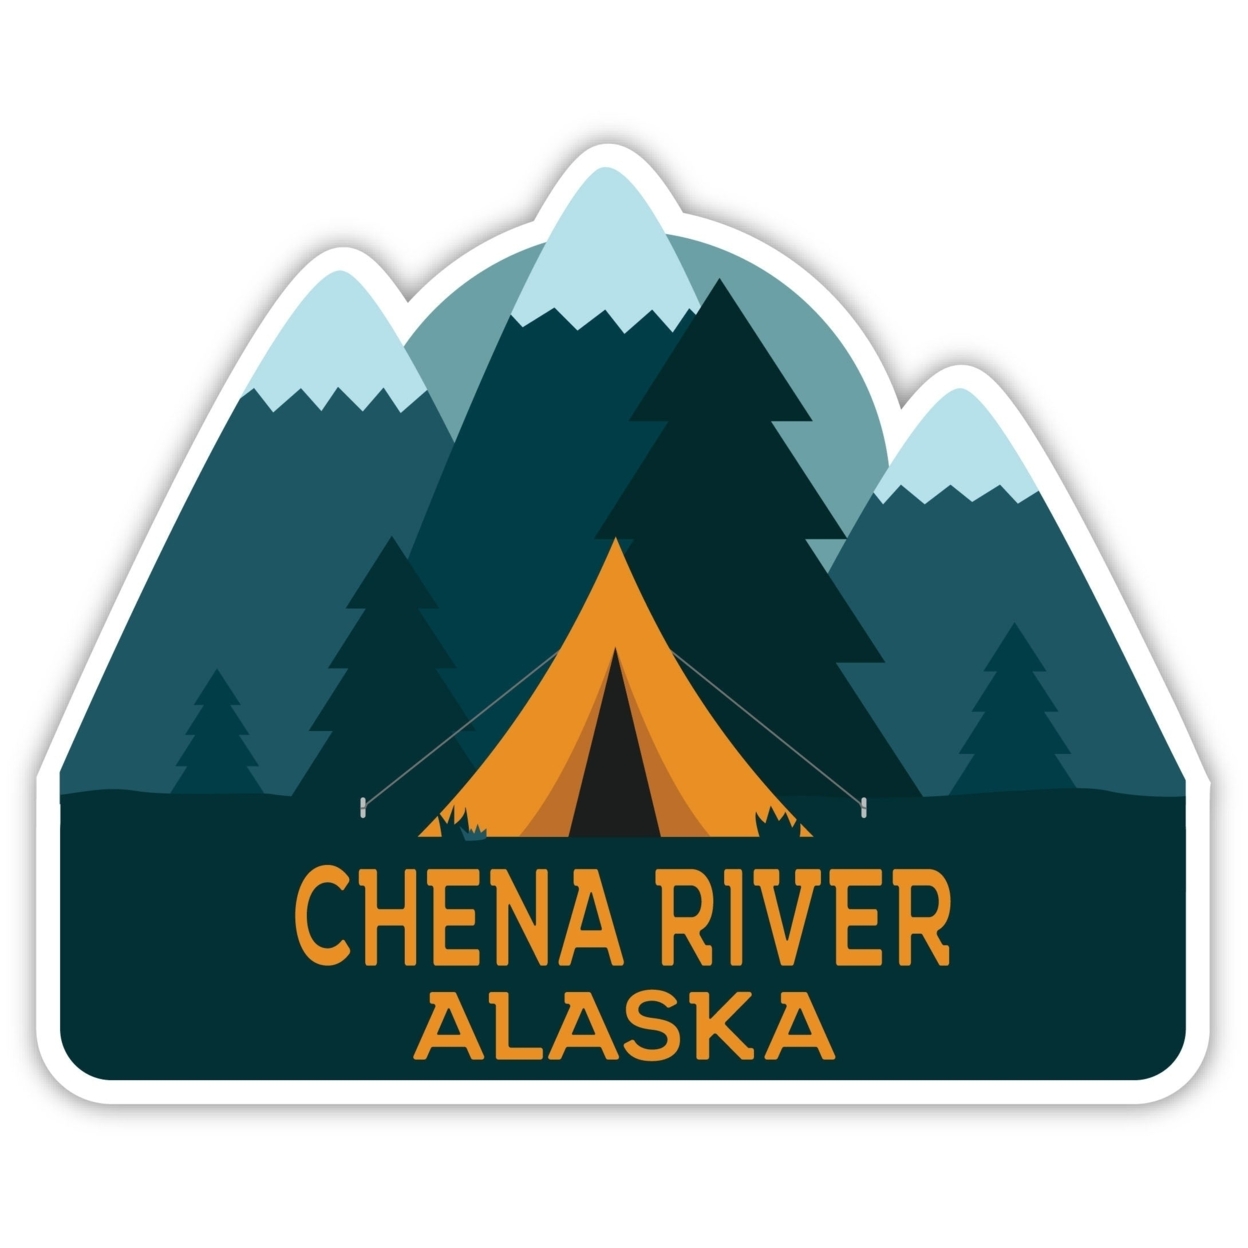 Chena River Alaska Souvenir Decorative Stickers (Choose Theme And Size) - 4-Pack, 2-Inch, Tent